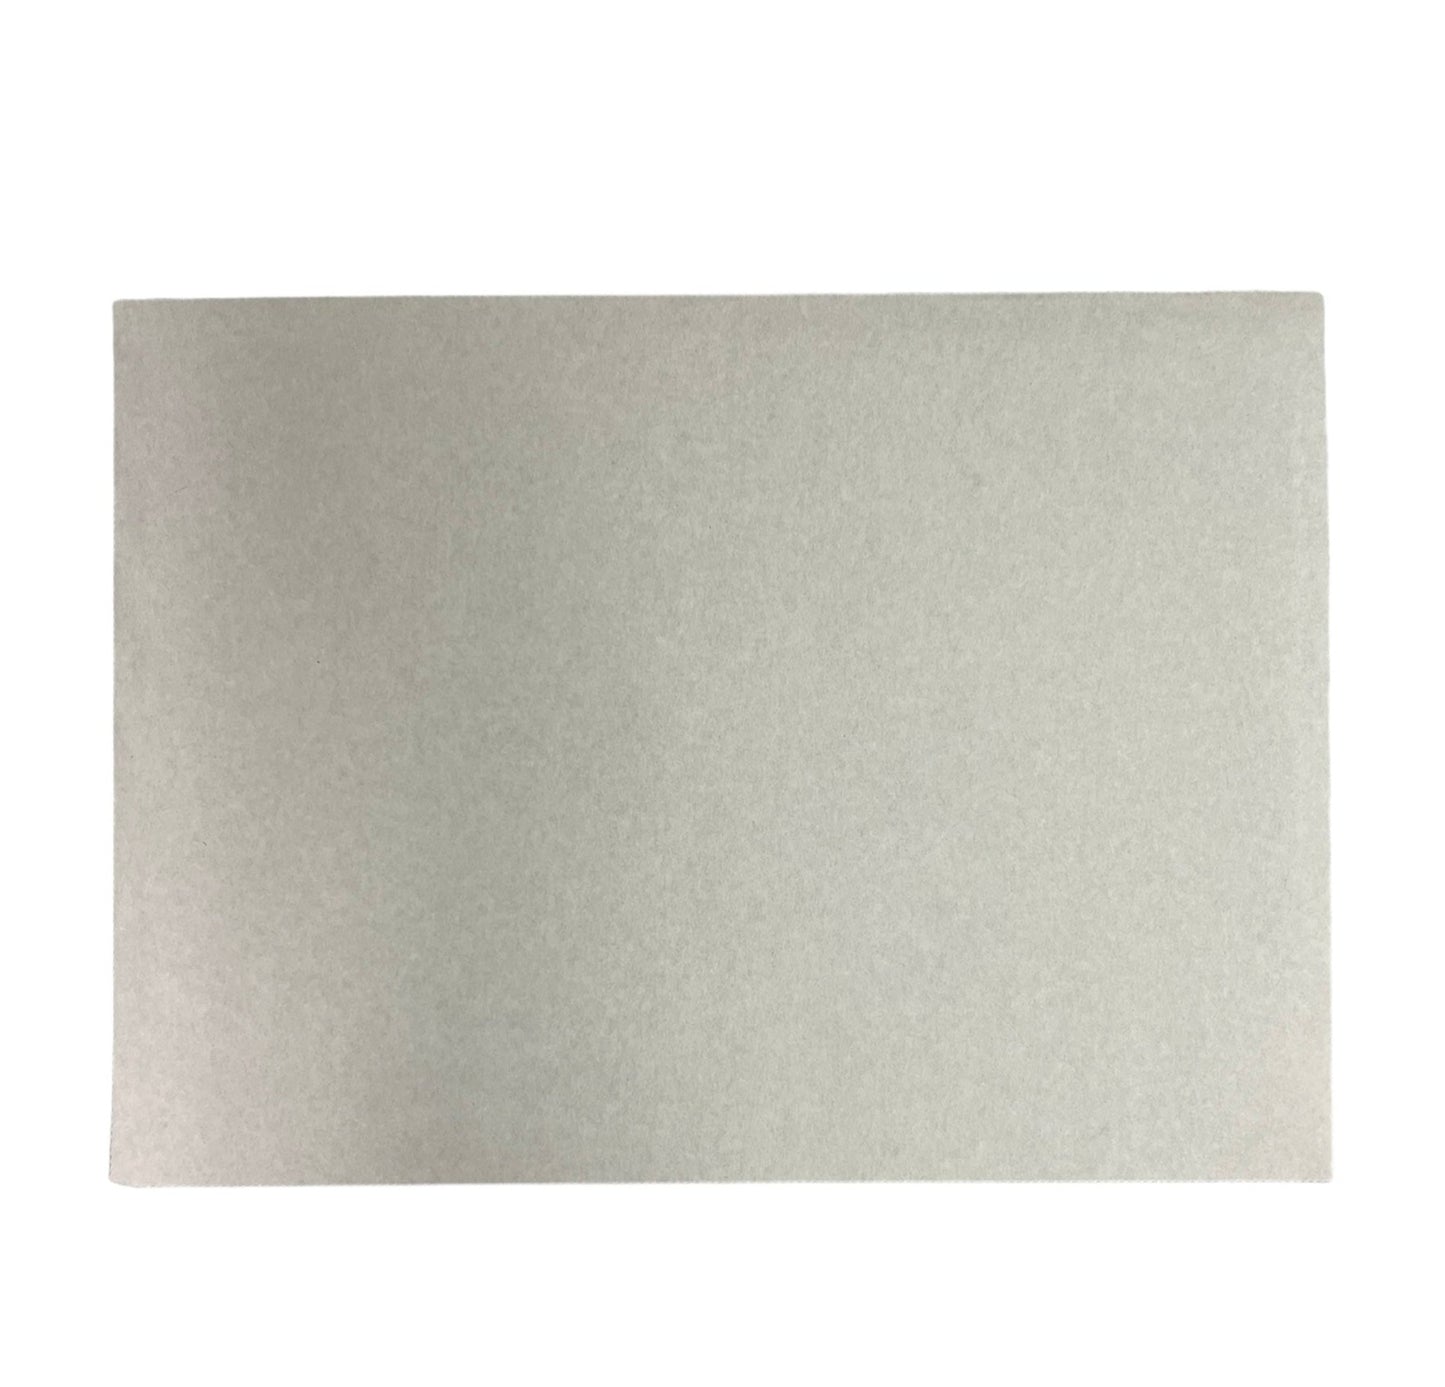 1/2 Sheet White Corrugated Cake Board